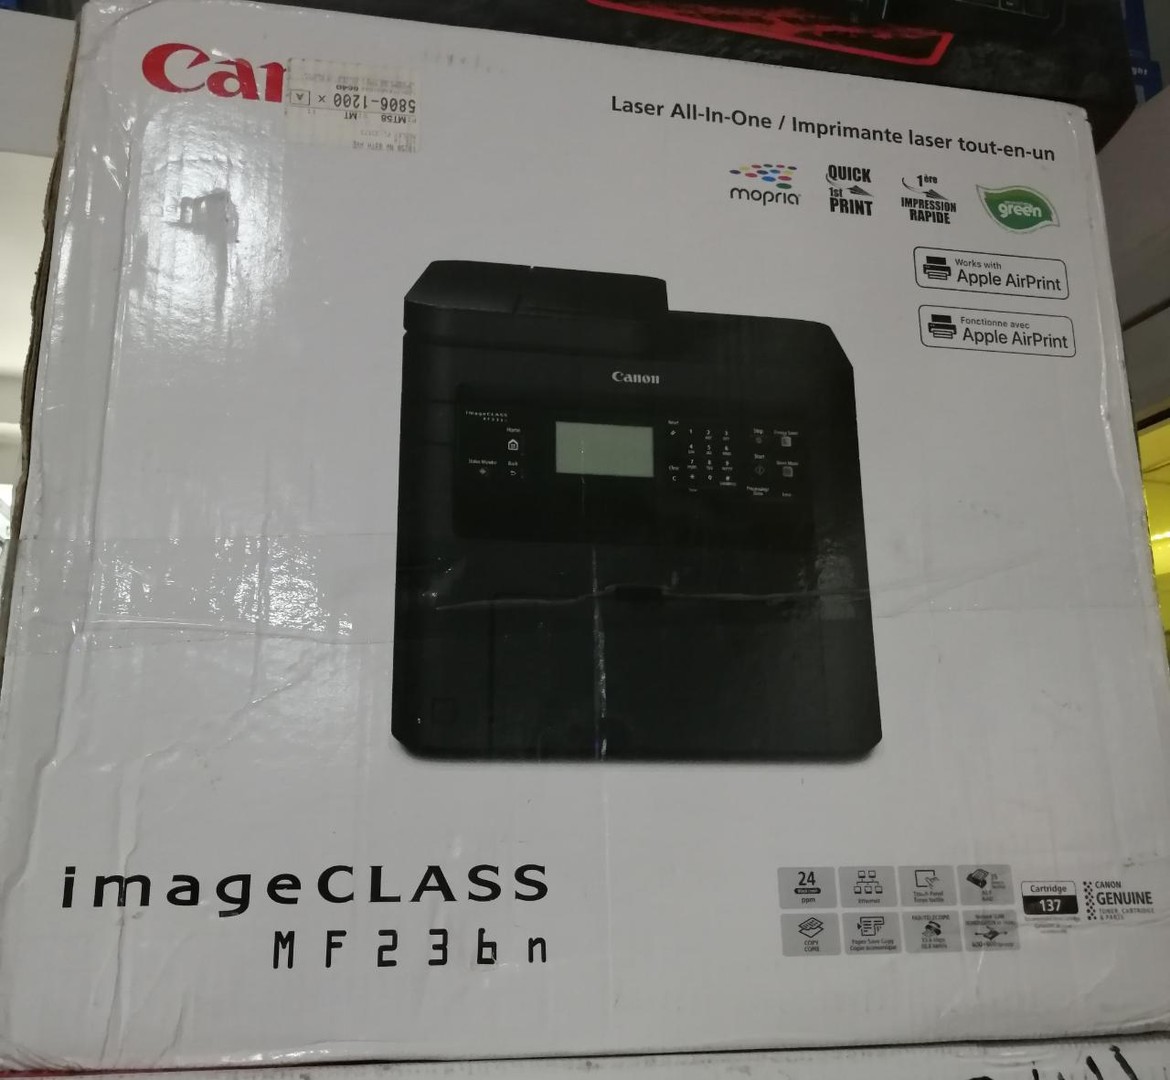 impresoras y scanners - Impresora láser inalámbrica Canon image CLASS MF236n